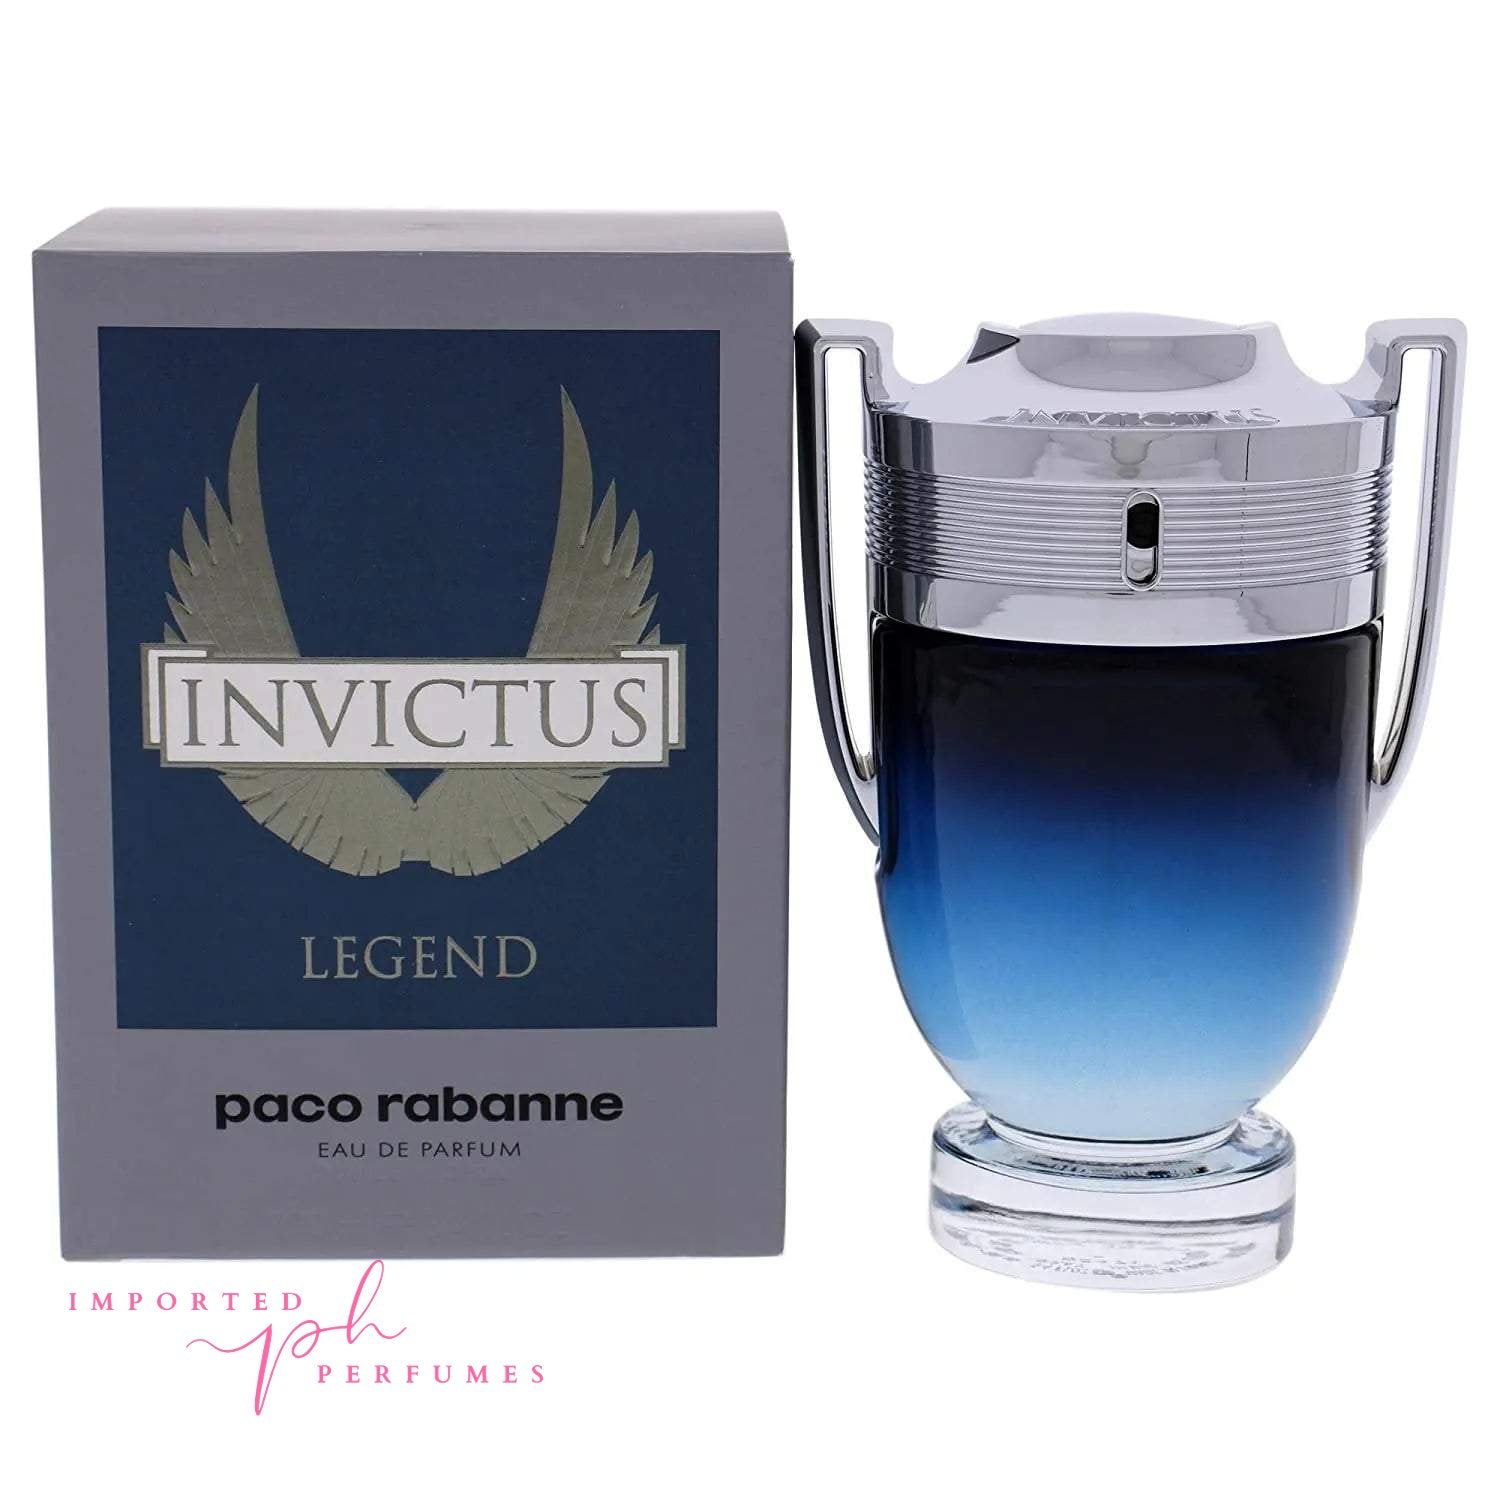 Paco Rabanne Invictus Legend For Men EDP 100ml-Imported Perfumes Co-For Men,Invictus,Legeng,Men,Men Perfume,paco,Paco Rabanne